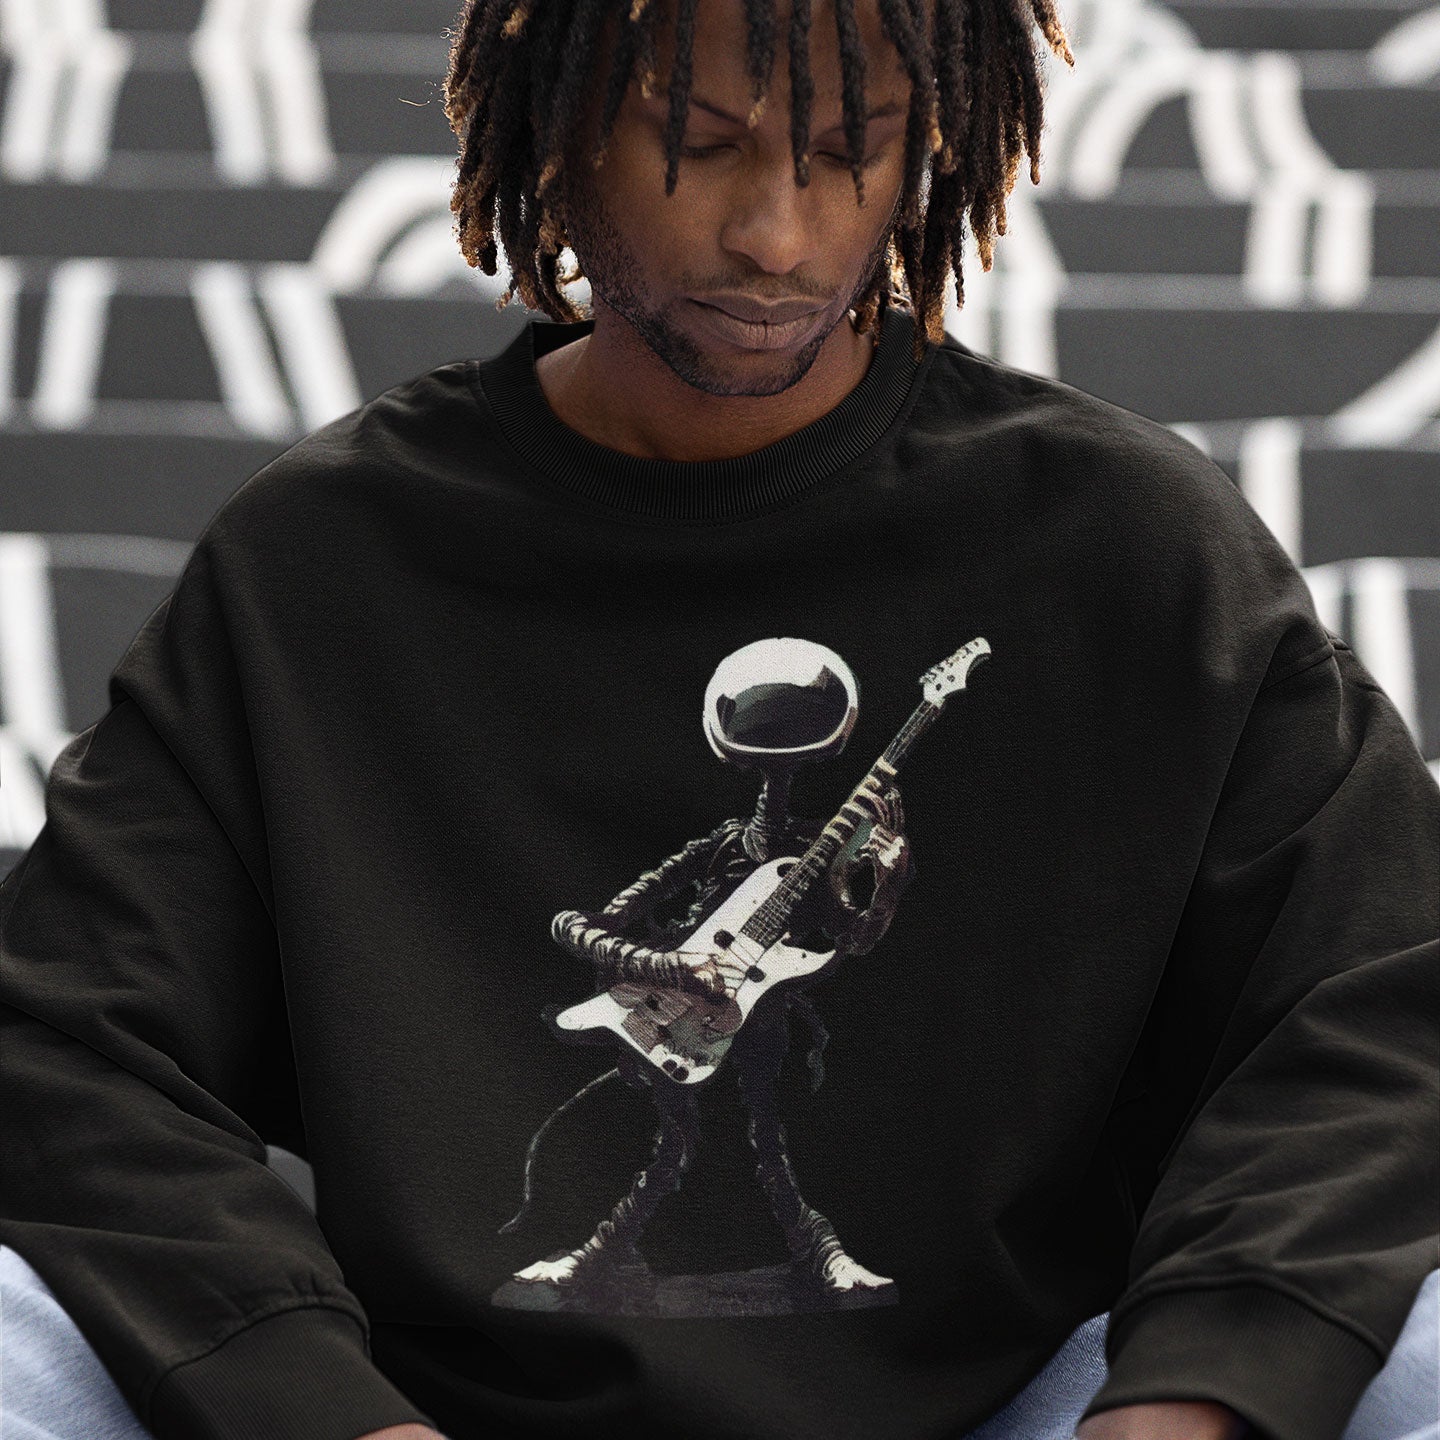 A man wearing a black sweatshirt with an alien playing a guitar print